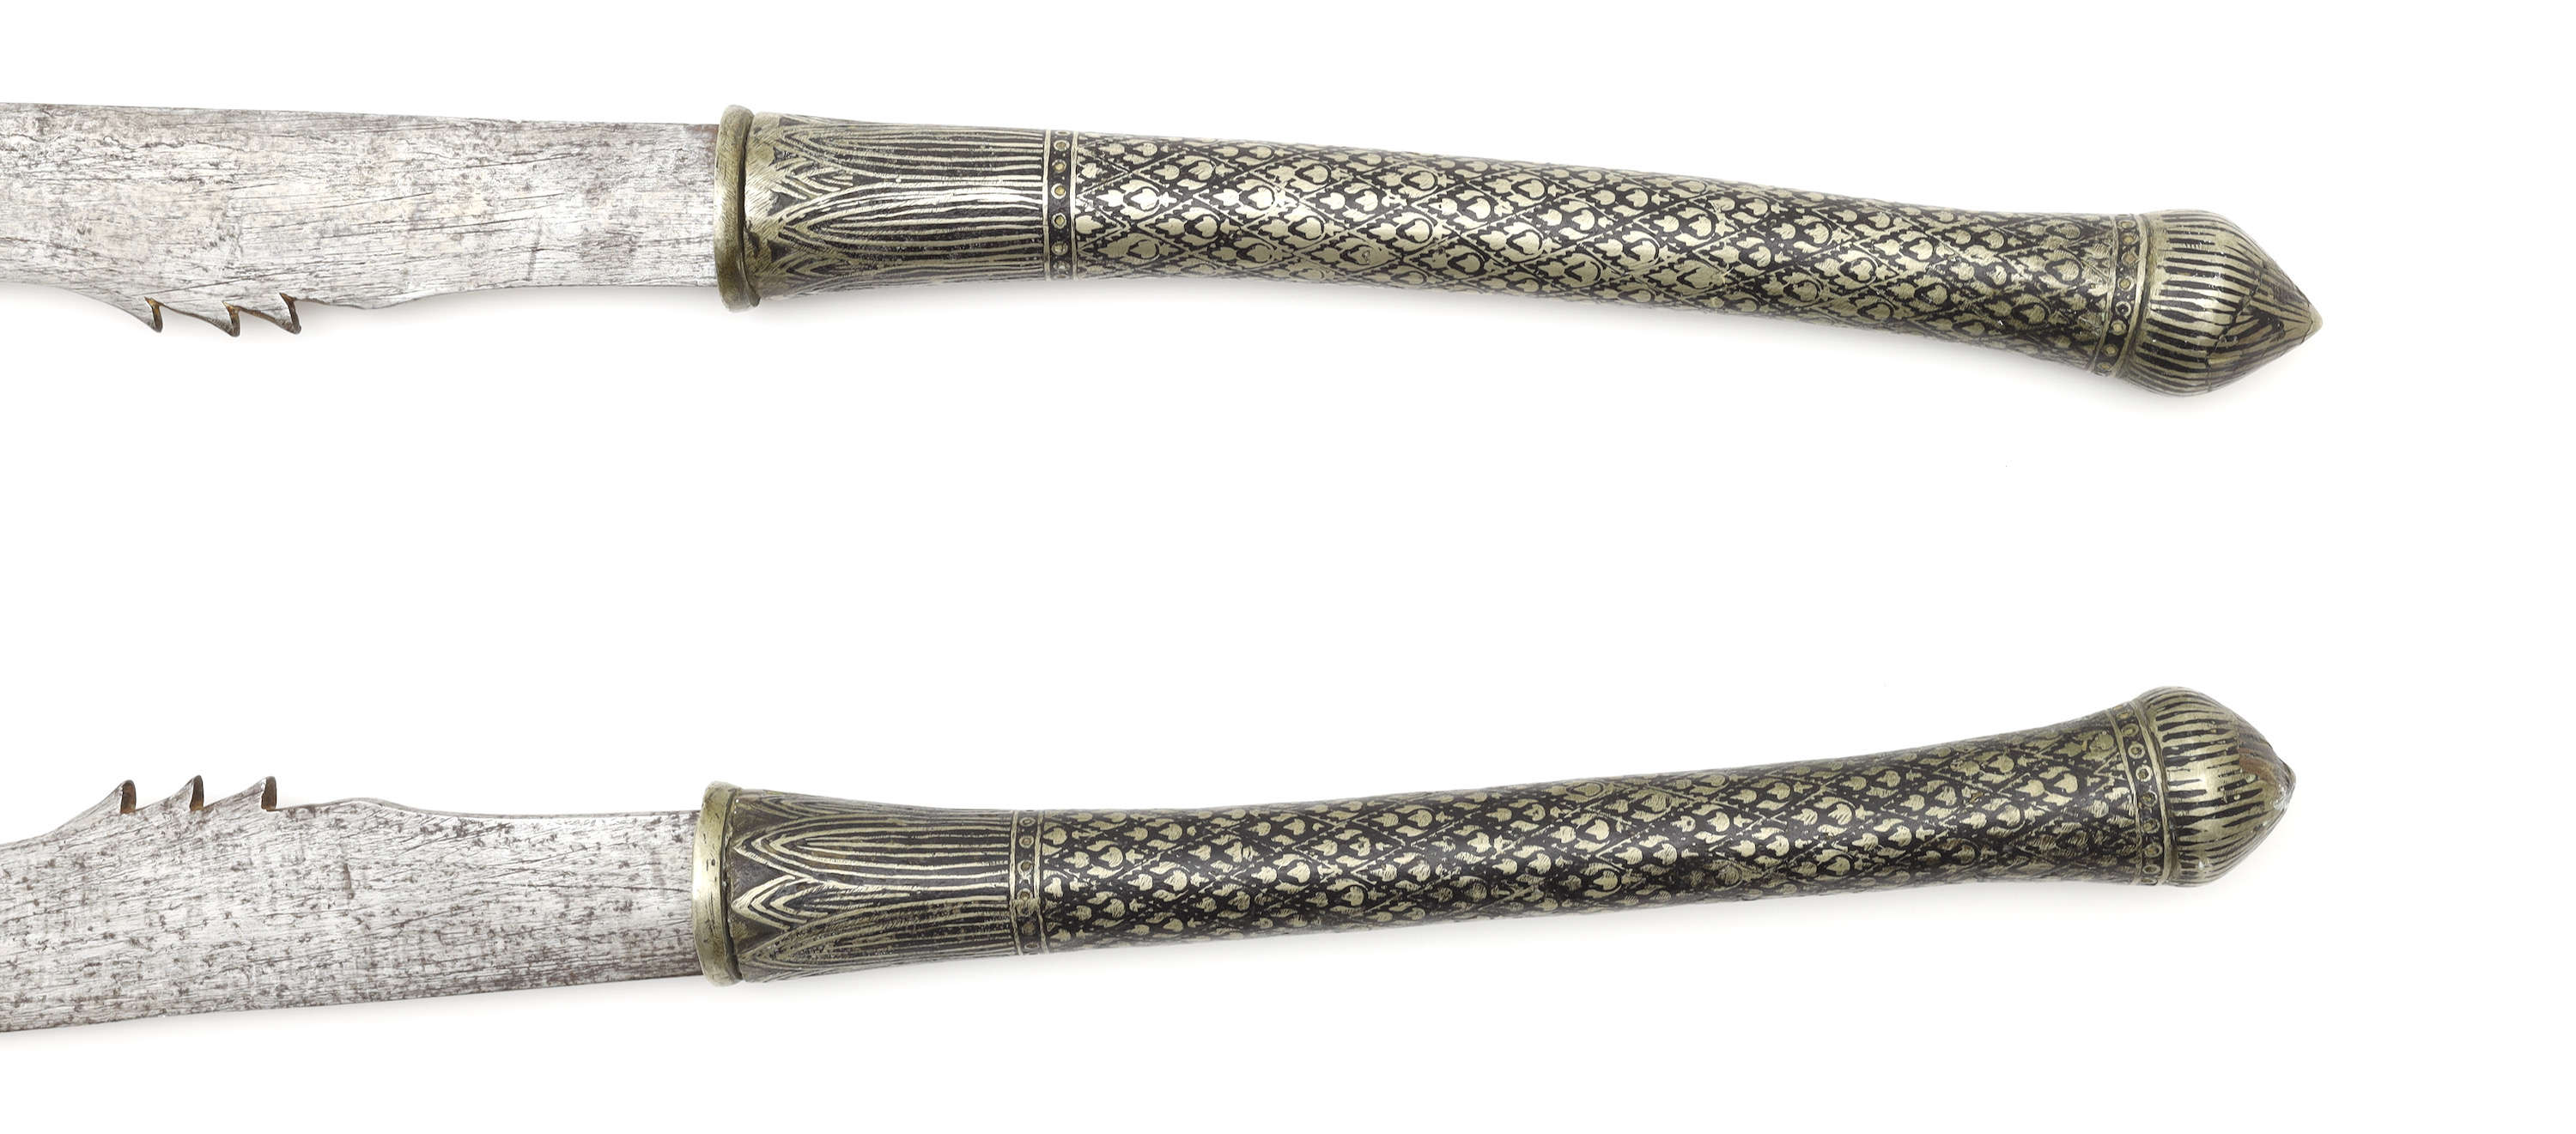 Northern Thai double swords